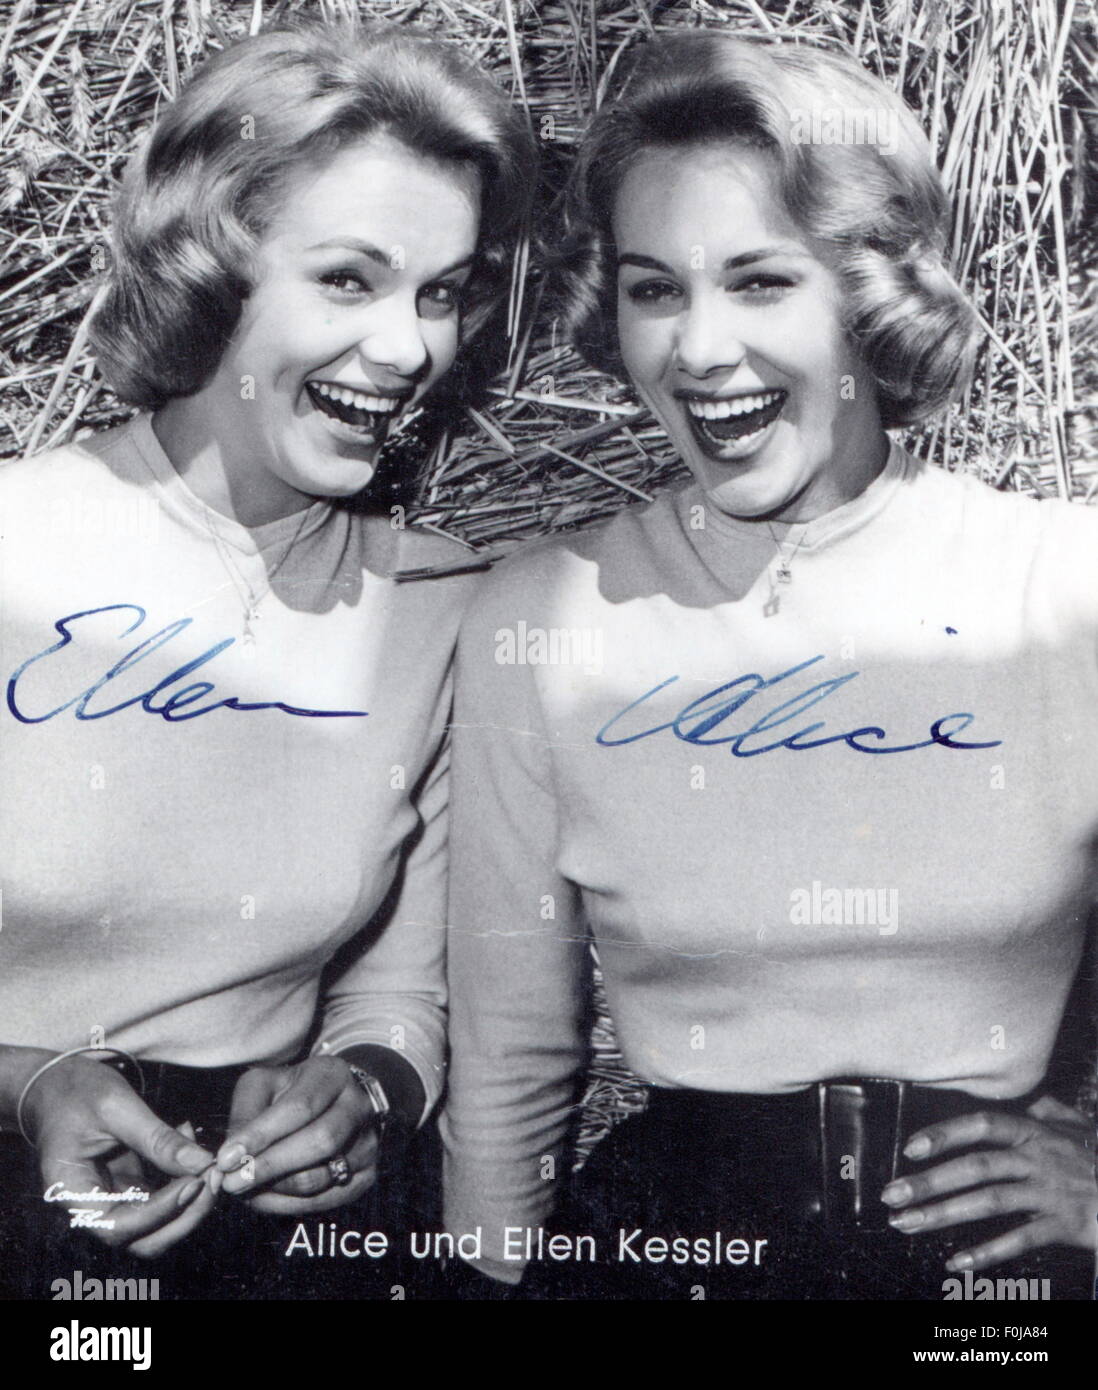 Kessler, Alice ed Ellen, * 20.8.1936, ballerini e attrici tedeschi, mezza lunghezza, cartolina autografa, 1960s, Foto Stock